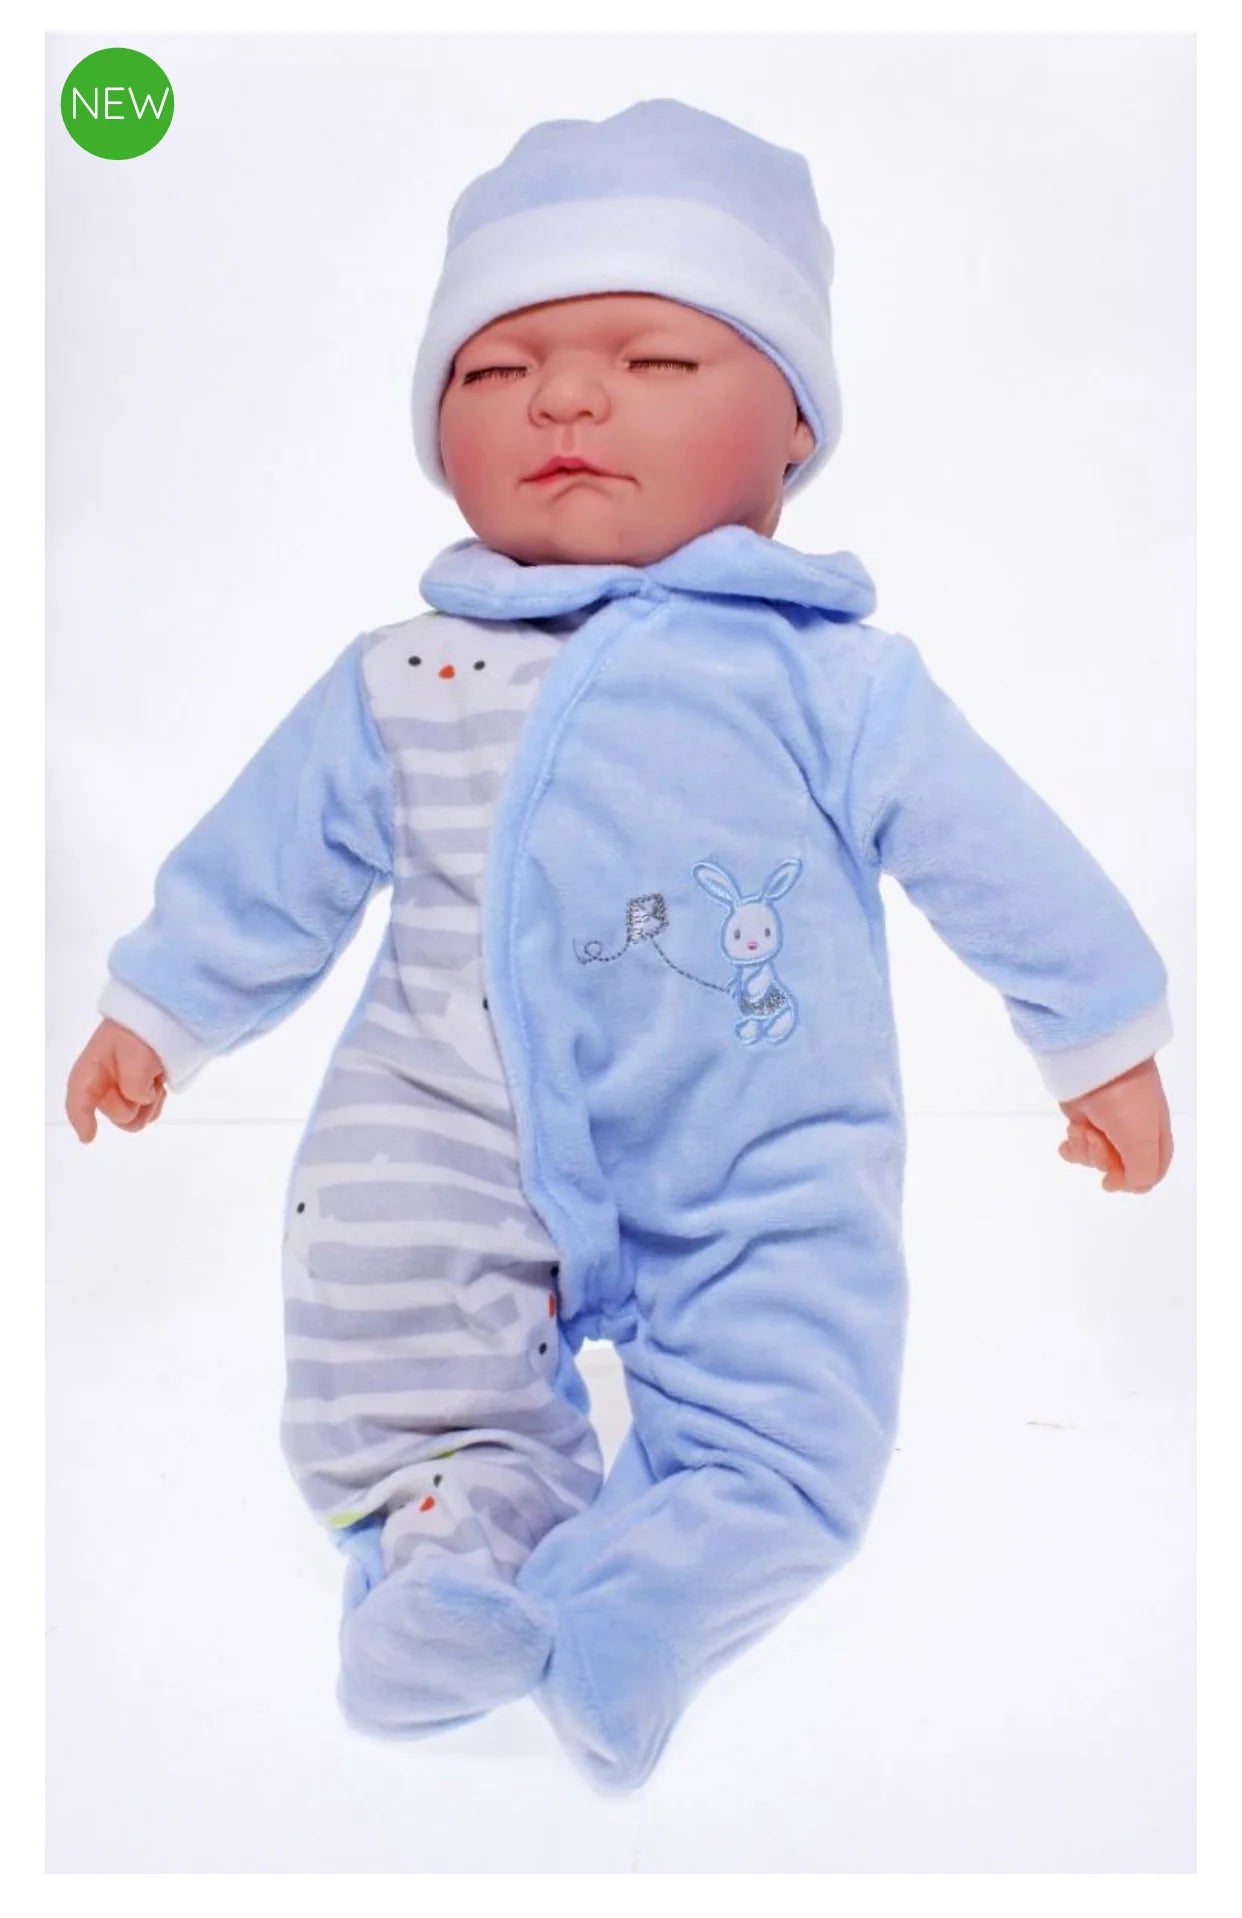 Baby Doll Asher Eyes Shut with Blue Sleepsuit